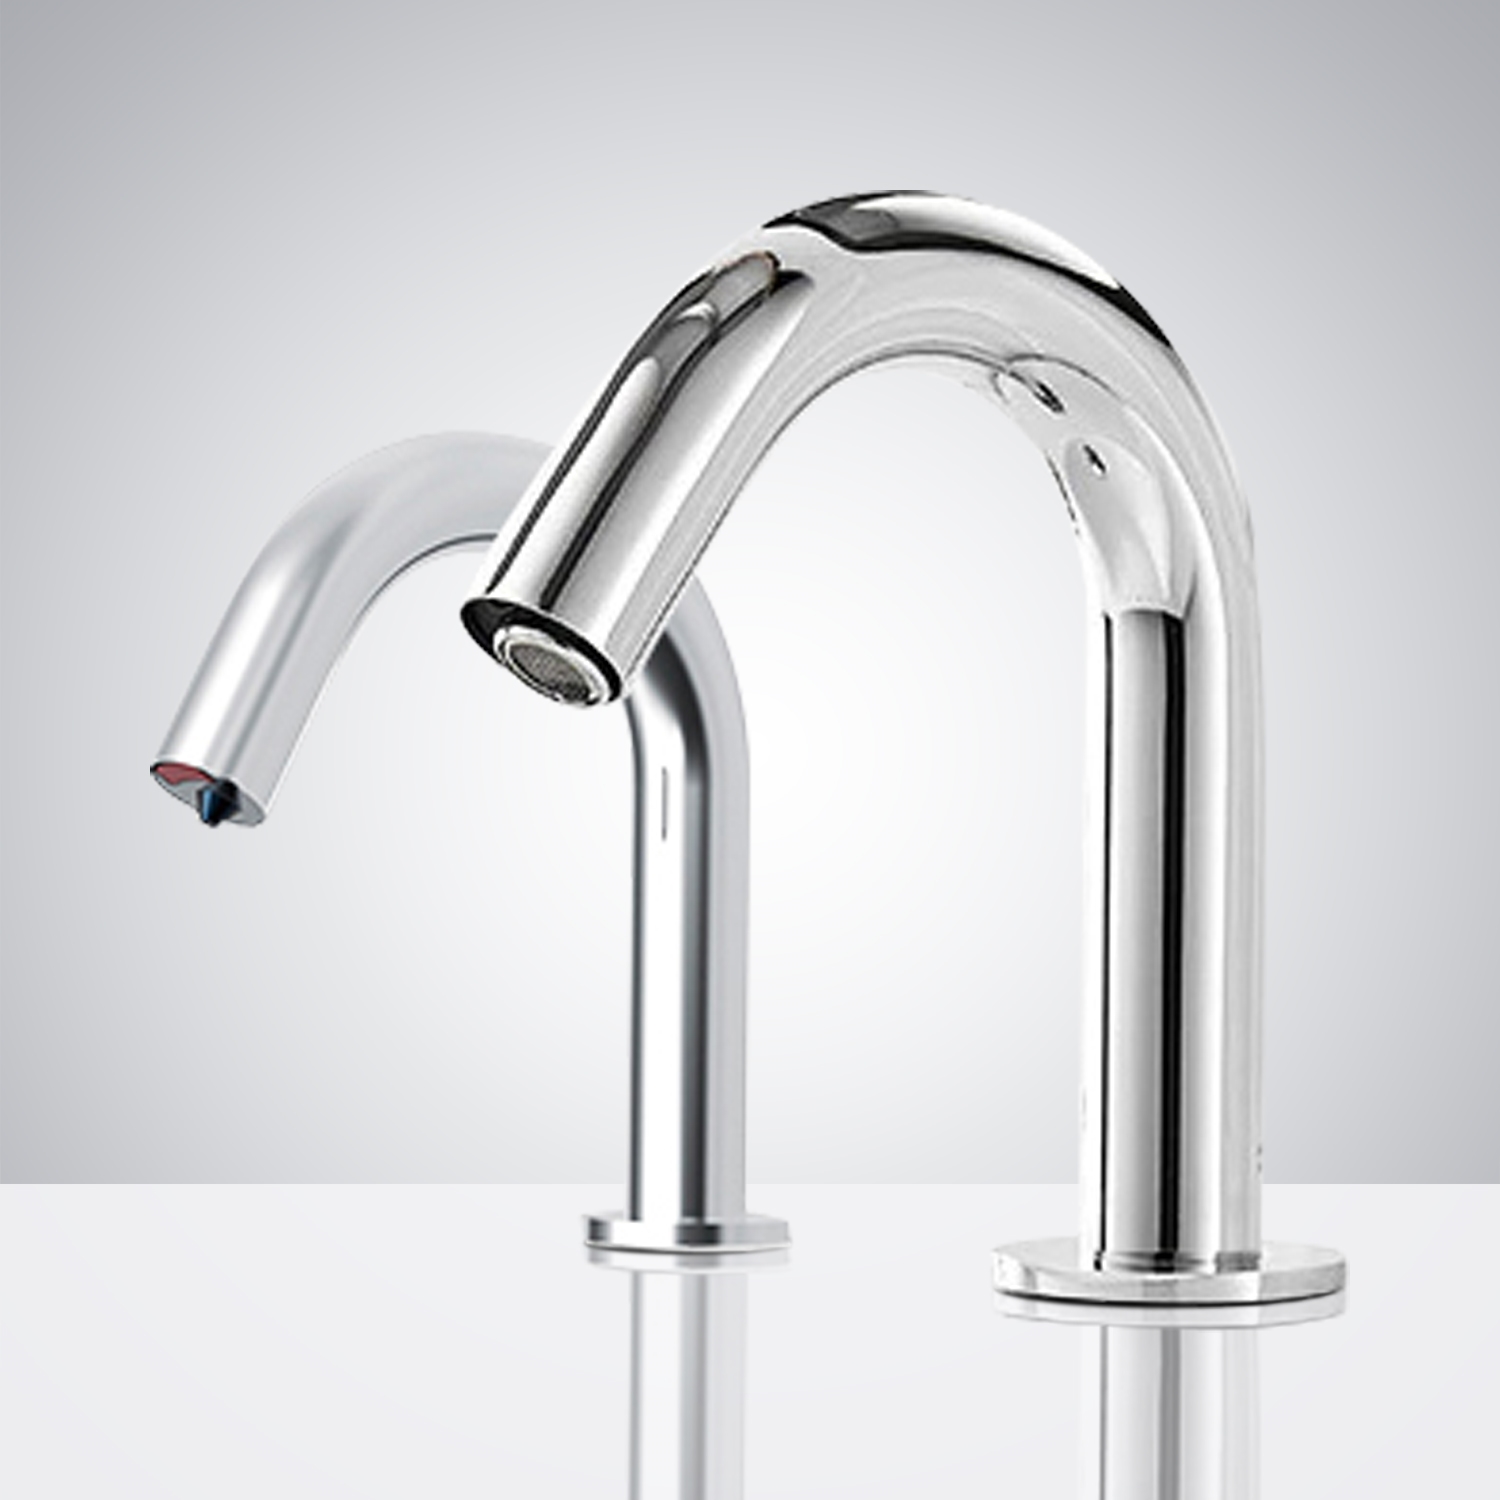 Fontana Bavaria Commercial Chrome Touchless Motion Sensor Faucet & Automatic Soap Dispenser for Restrooms